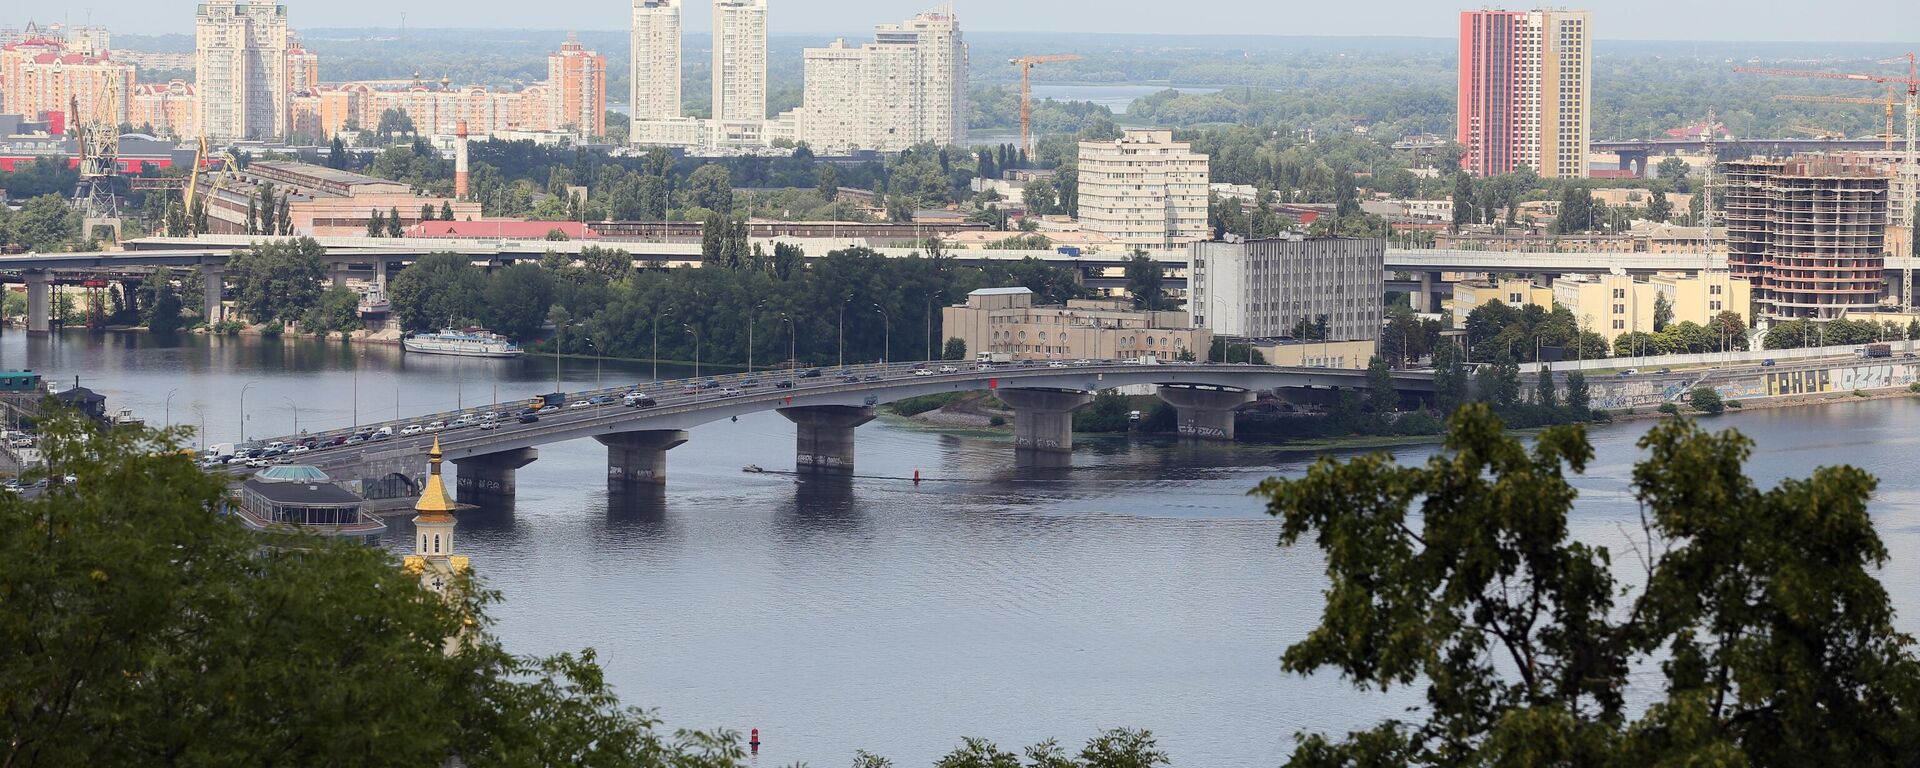 Вид на Гаванский мост в Киеве, архивное фото - Sputnik Lietuva, 1920, 23.08.2021